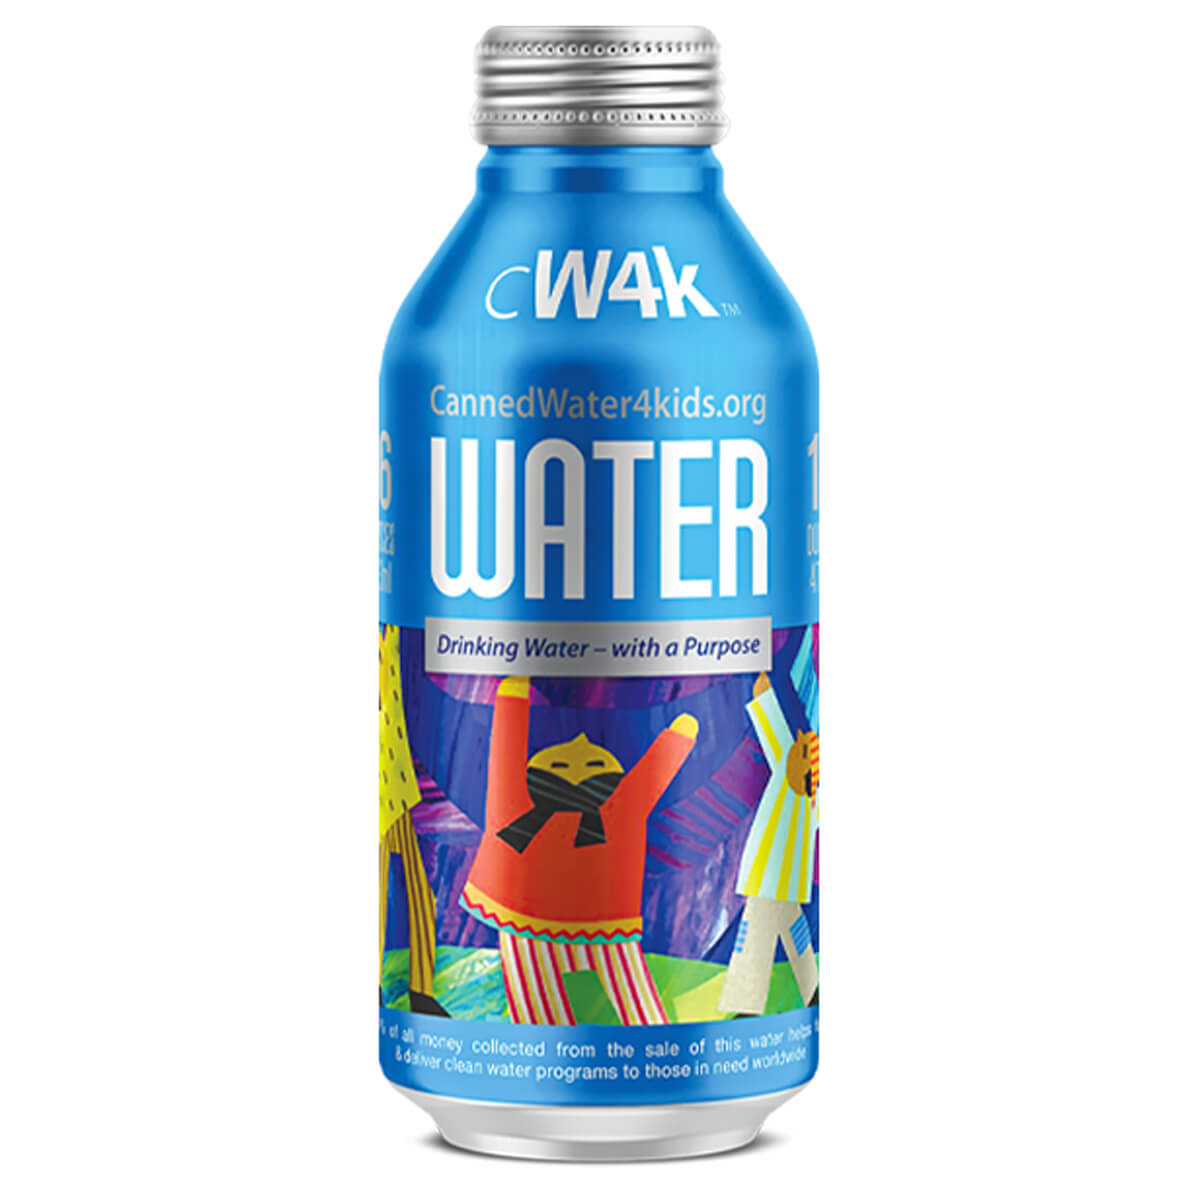 https://www.cannedwater4kids.org/wp-content/uploads/2021/02/cw4k-16-ounce-bottle-siingle-X.jpg